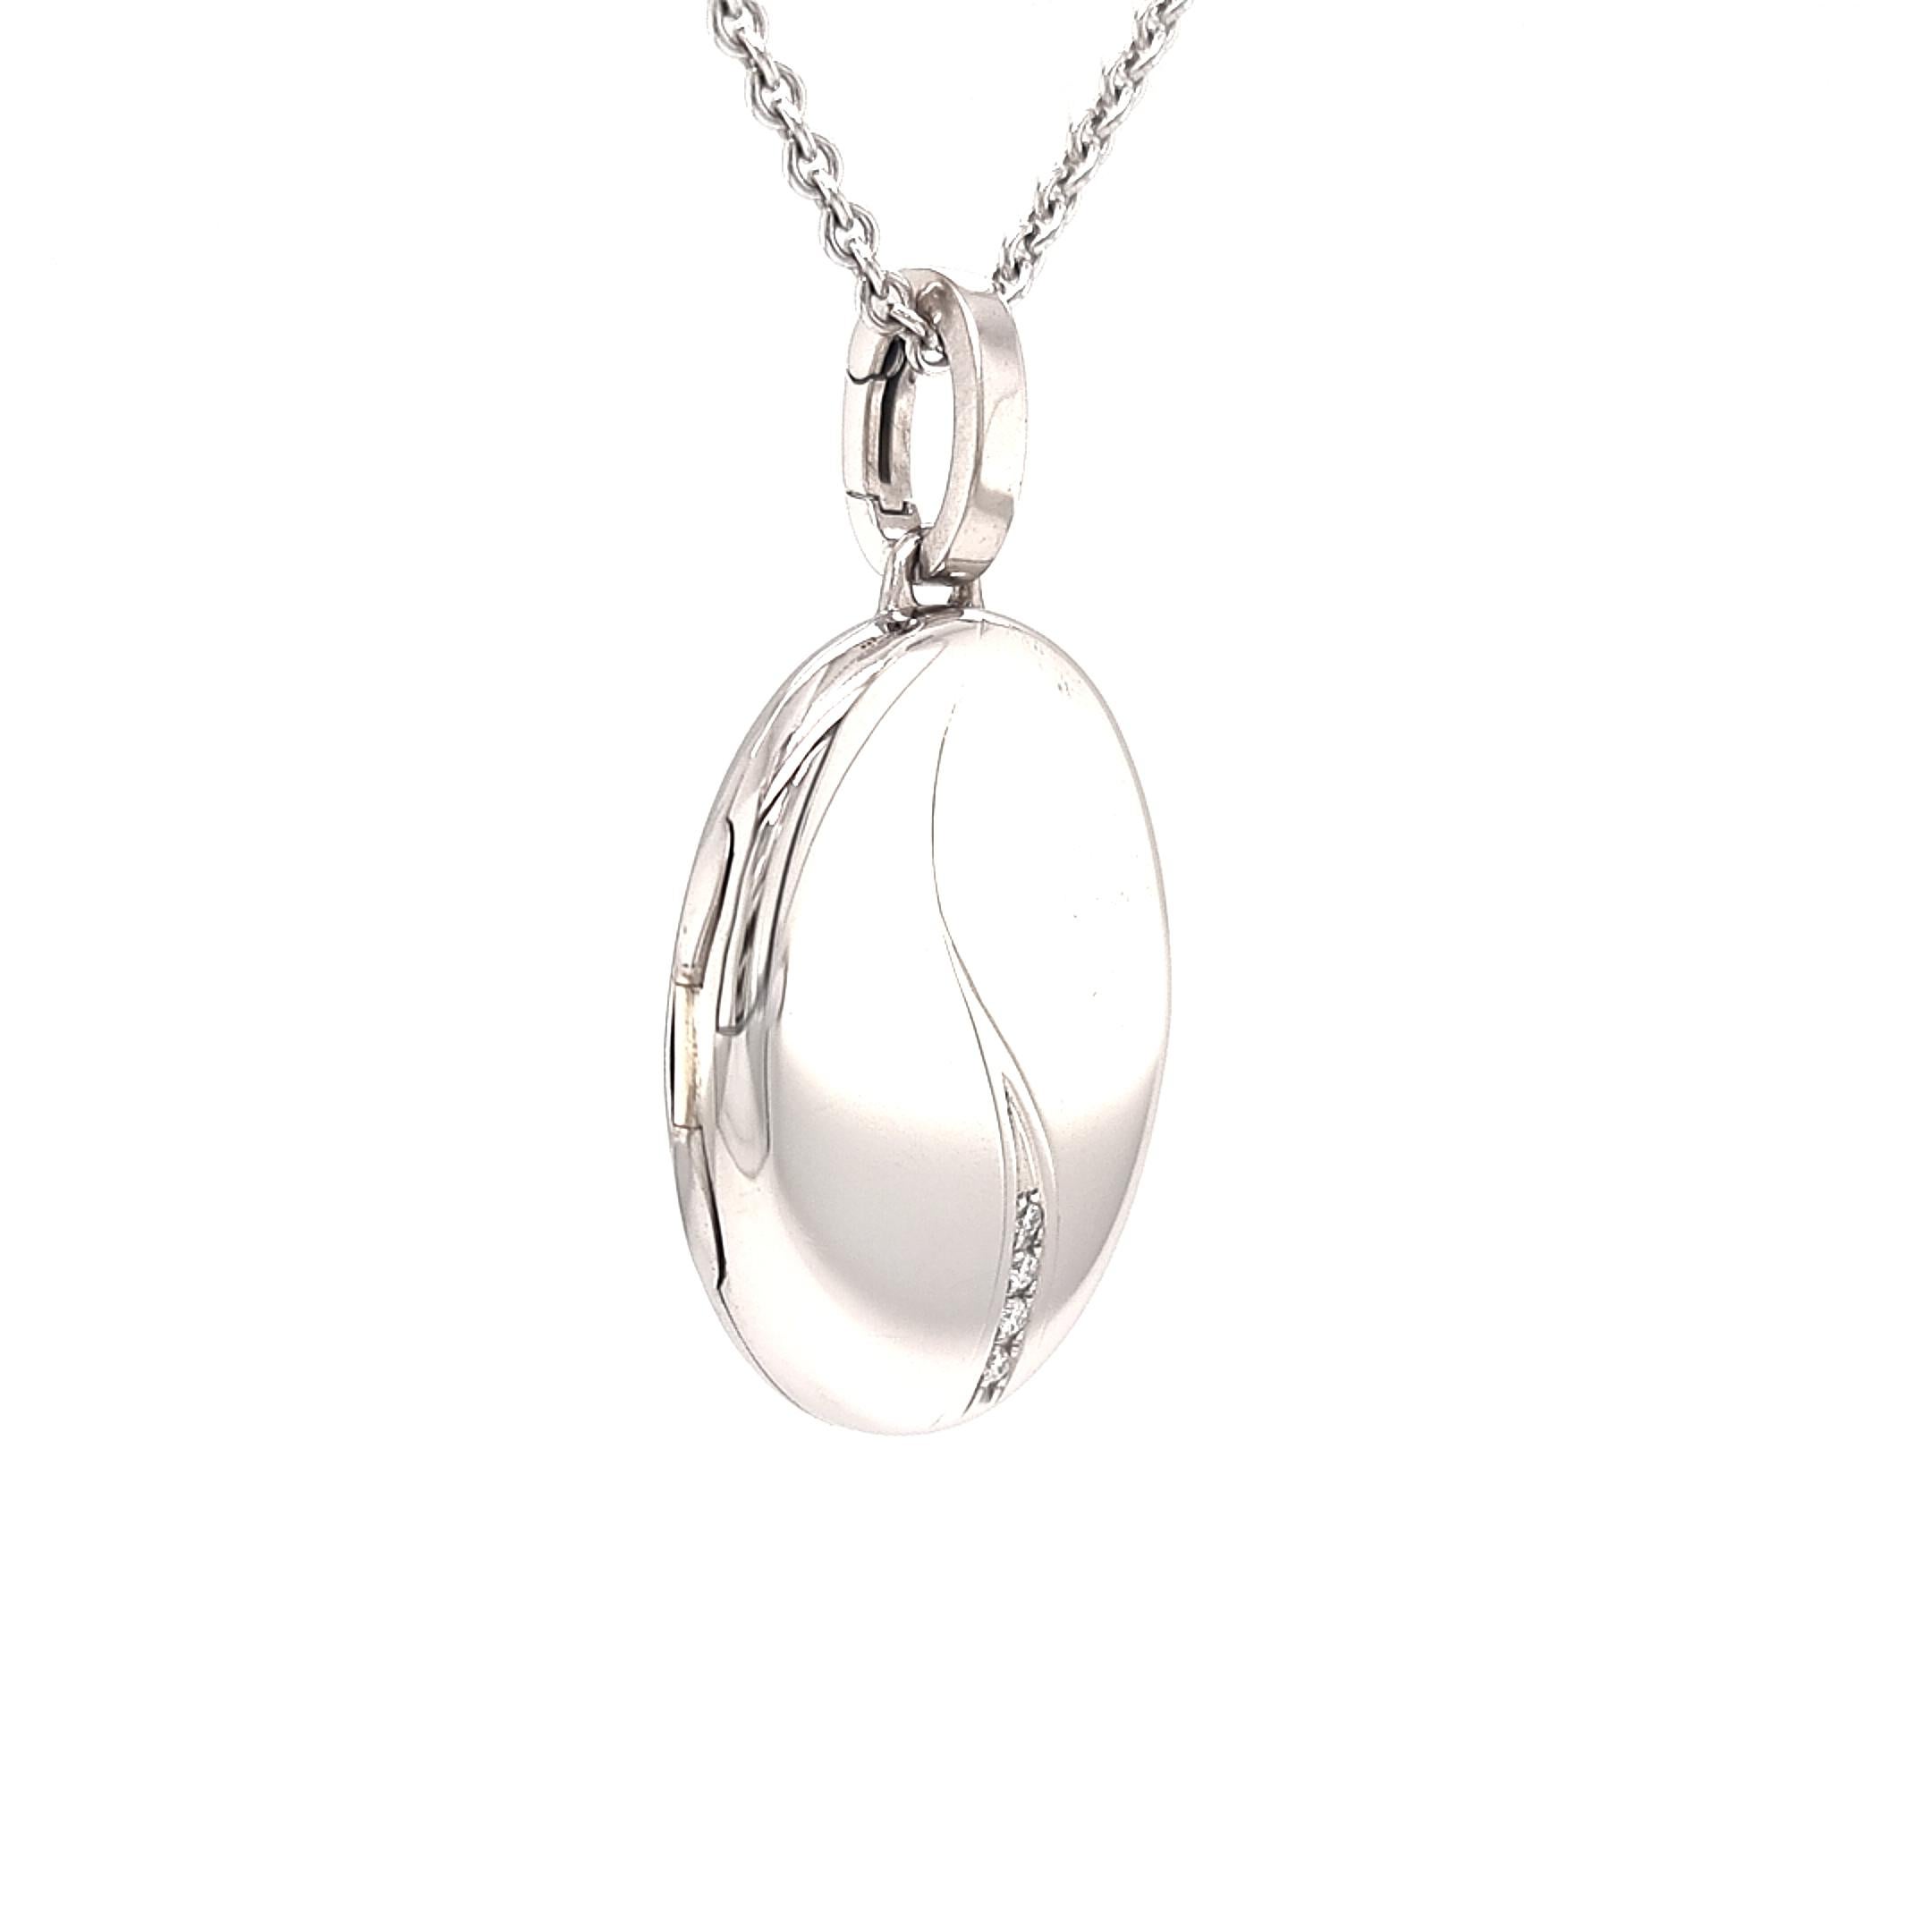 Victorian Oval Locket Pendant Necklace Solid 18k White Gold 4 Diamonds 0.04 Carat H VS For Sale